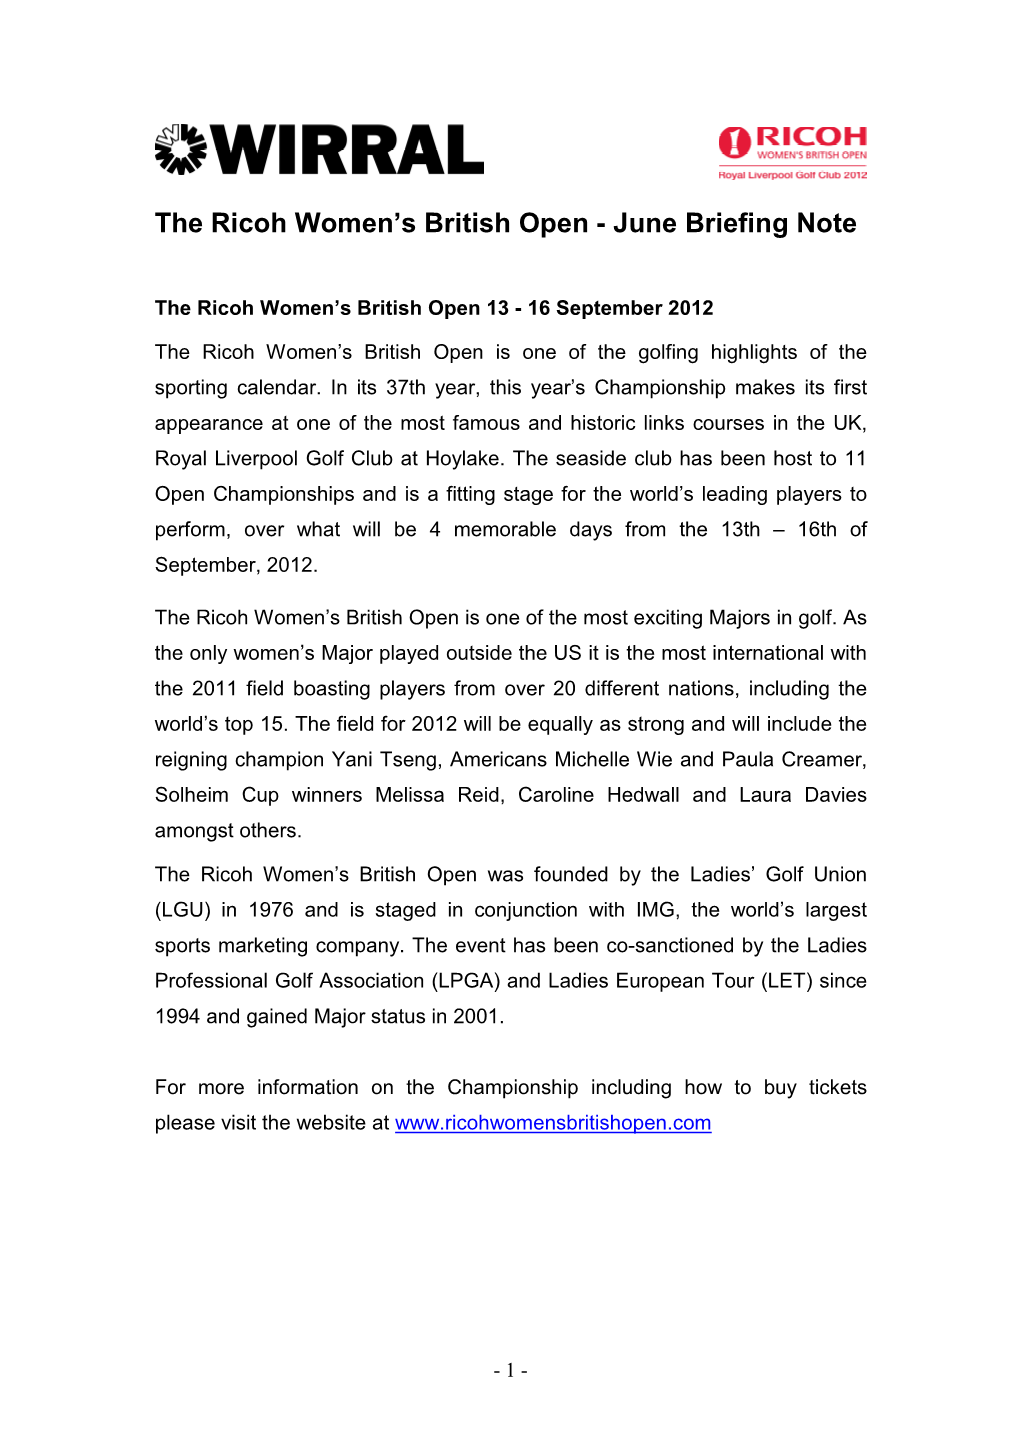 The Ricoh Women's British Open